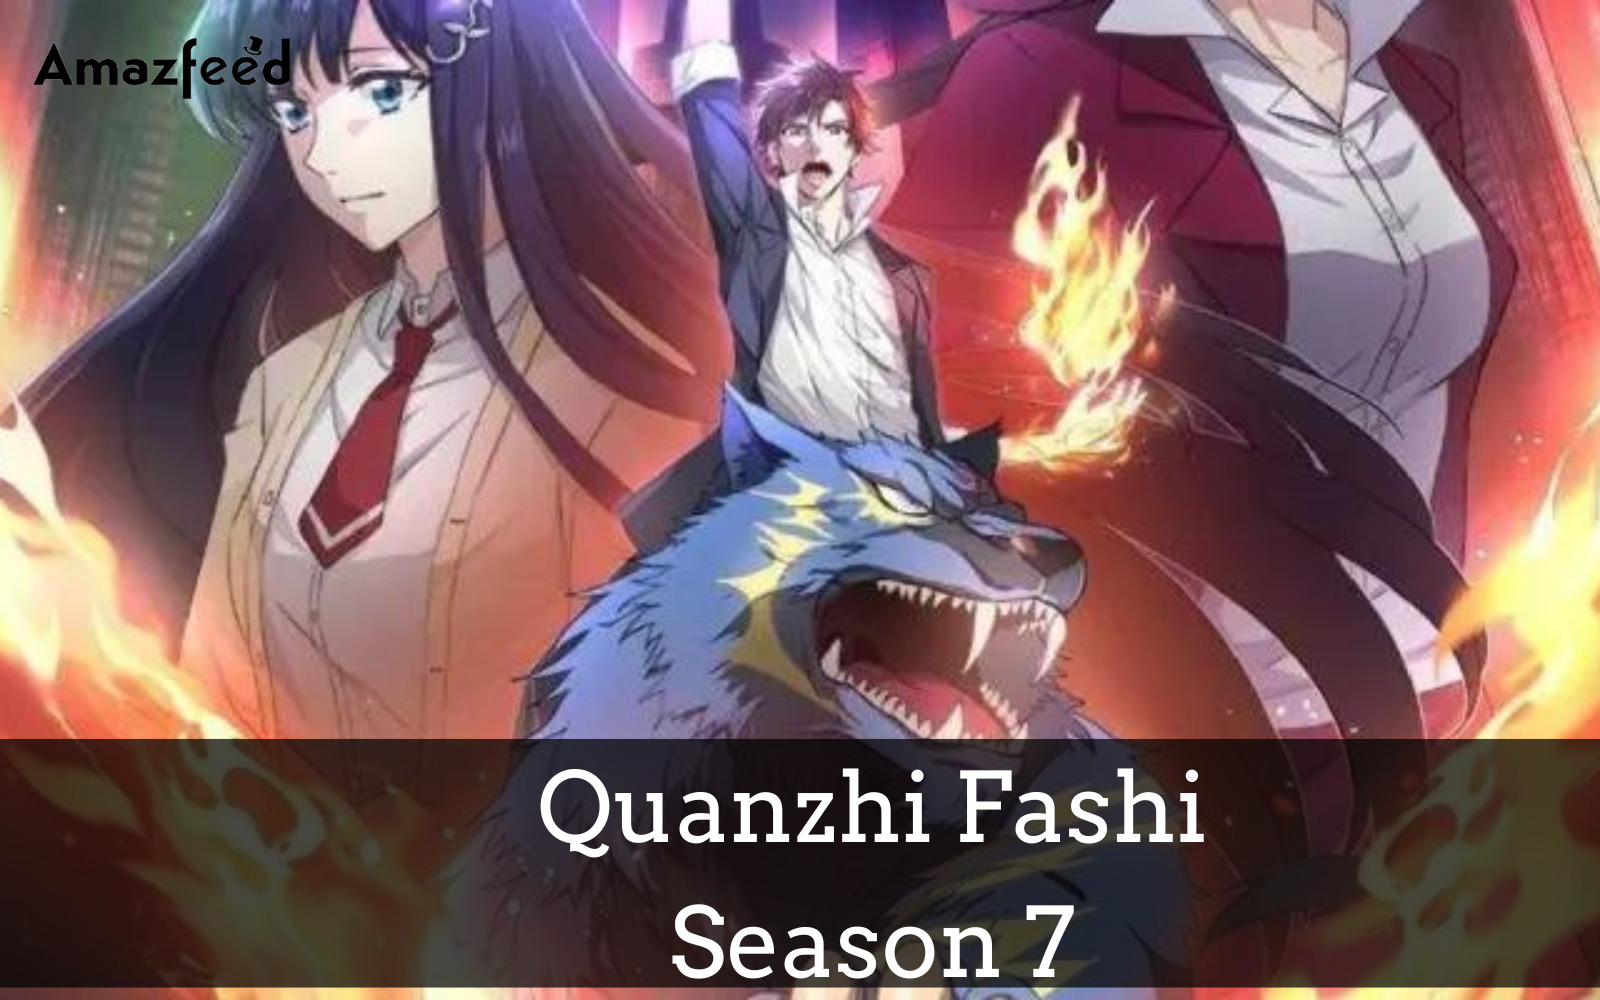 When Is Quanzhi Fashi Season 7 Coming Out (Release Date)